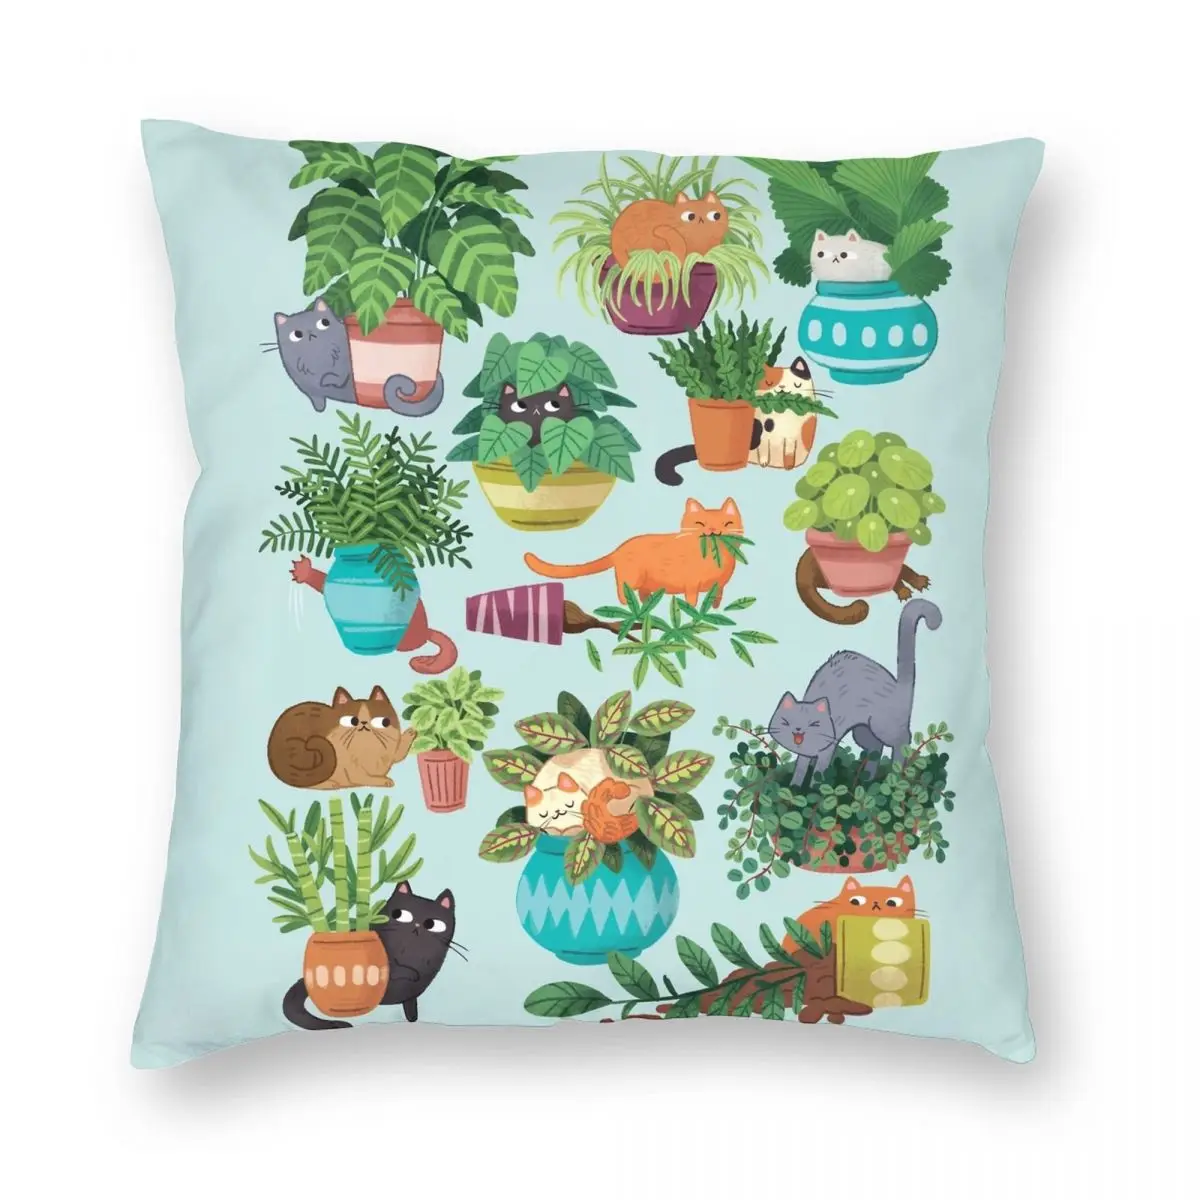 

Cats And Plants Pillowcase Polyester Linen Velvet Creative Zip Decor Throw Pillow Case Home Cushion Cover 18"